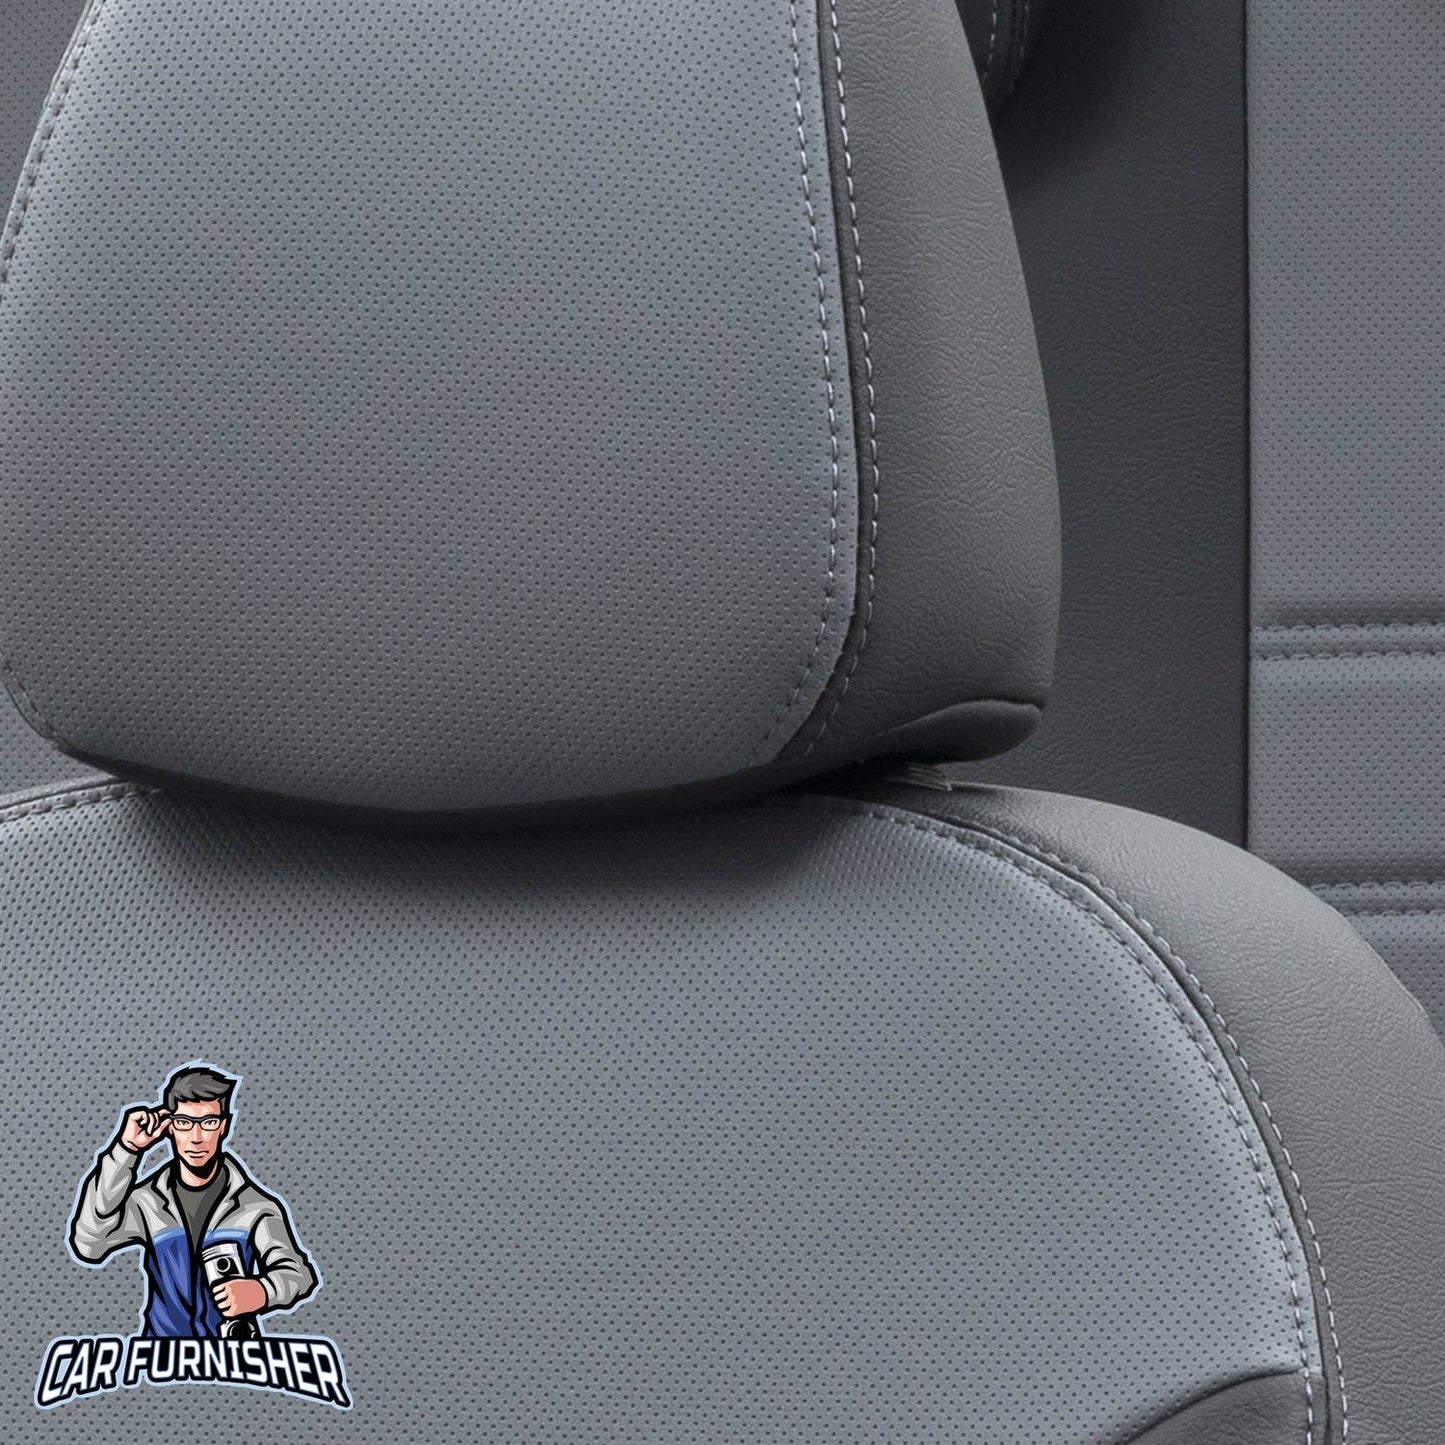 Hyundai i30 Seat Covers Istanbul Leather Design Smoked Black Leather